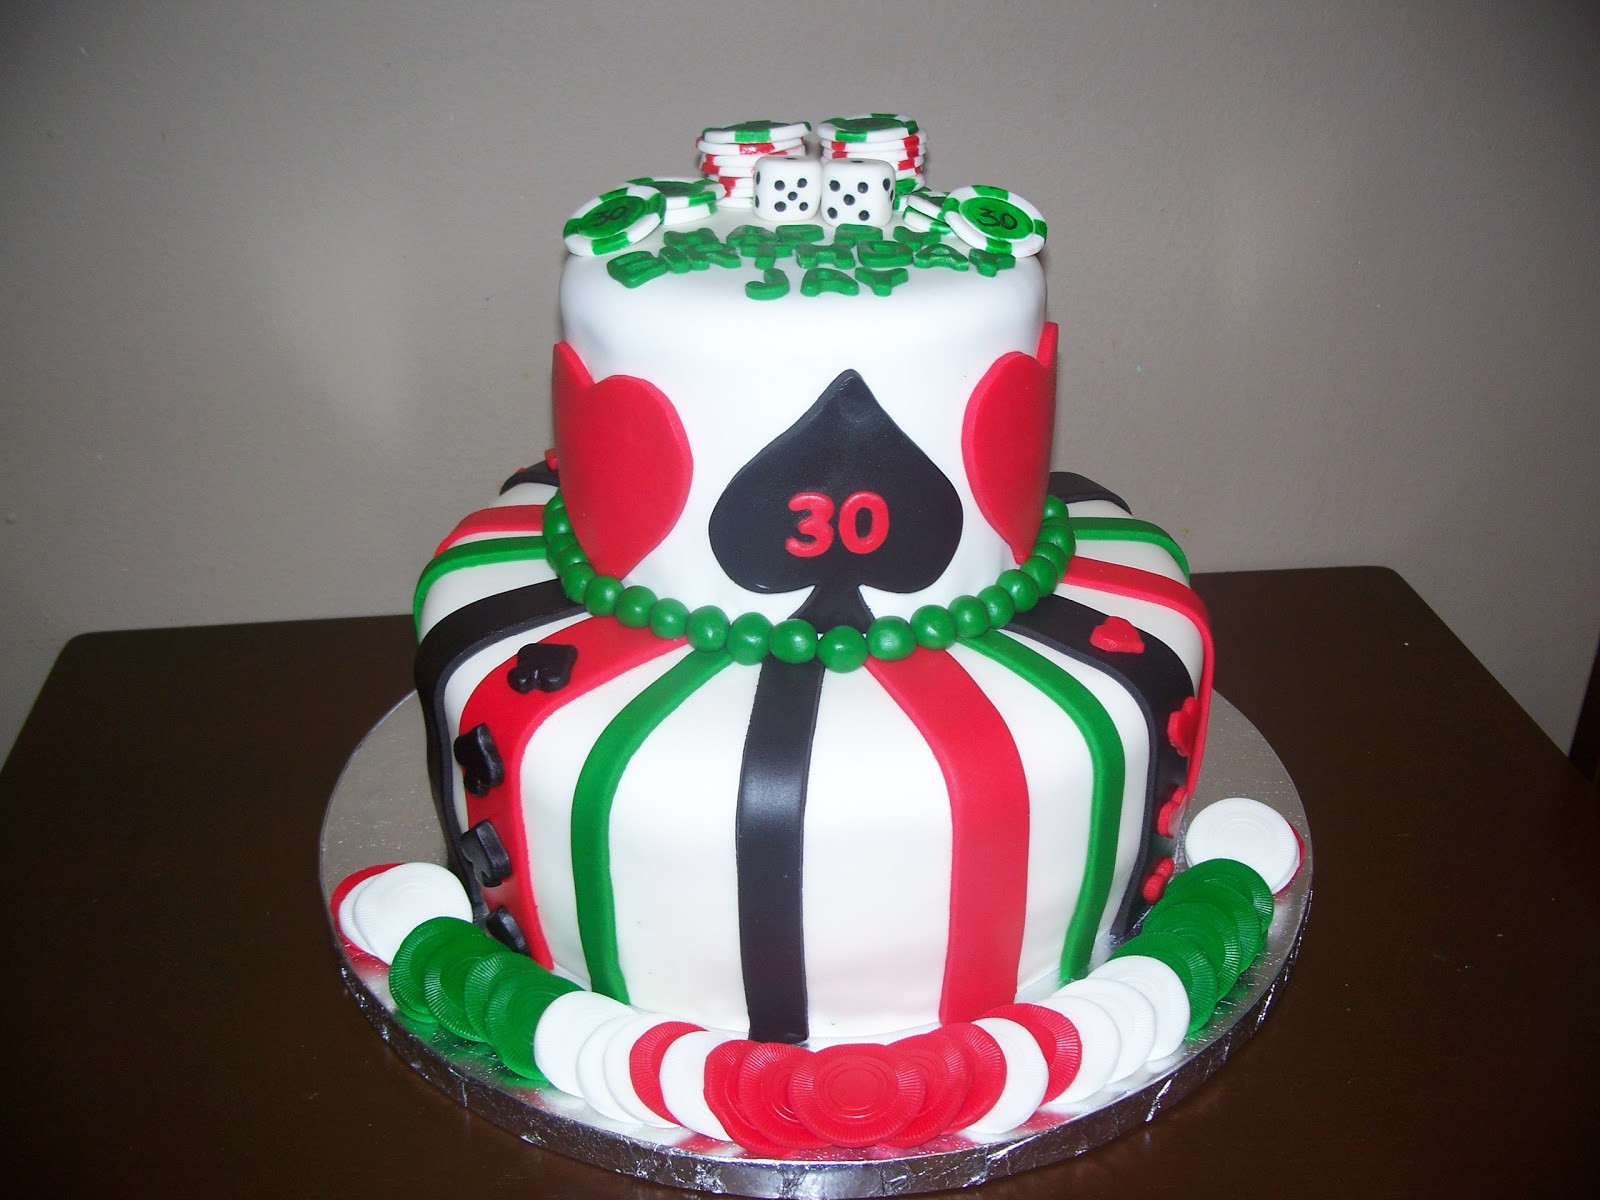 30th Birthday Cake For Him
 SweetDaisyCakes Poker themed 30th birthday cake